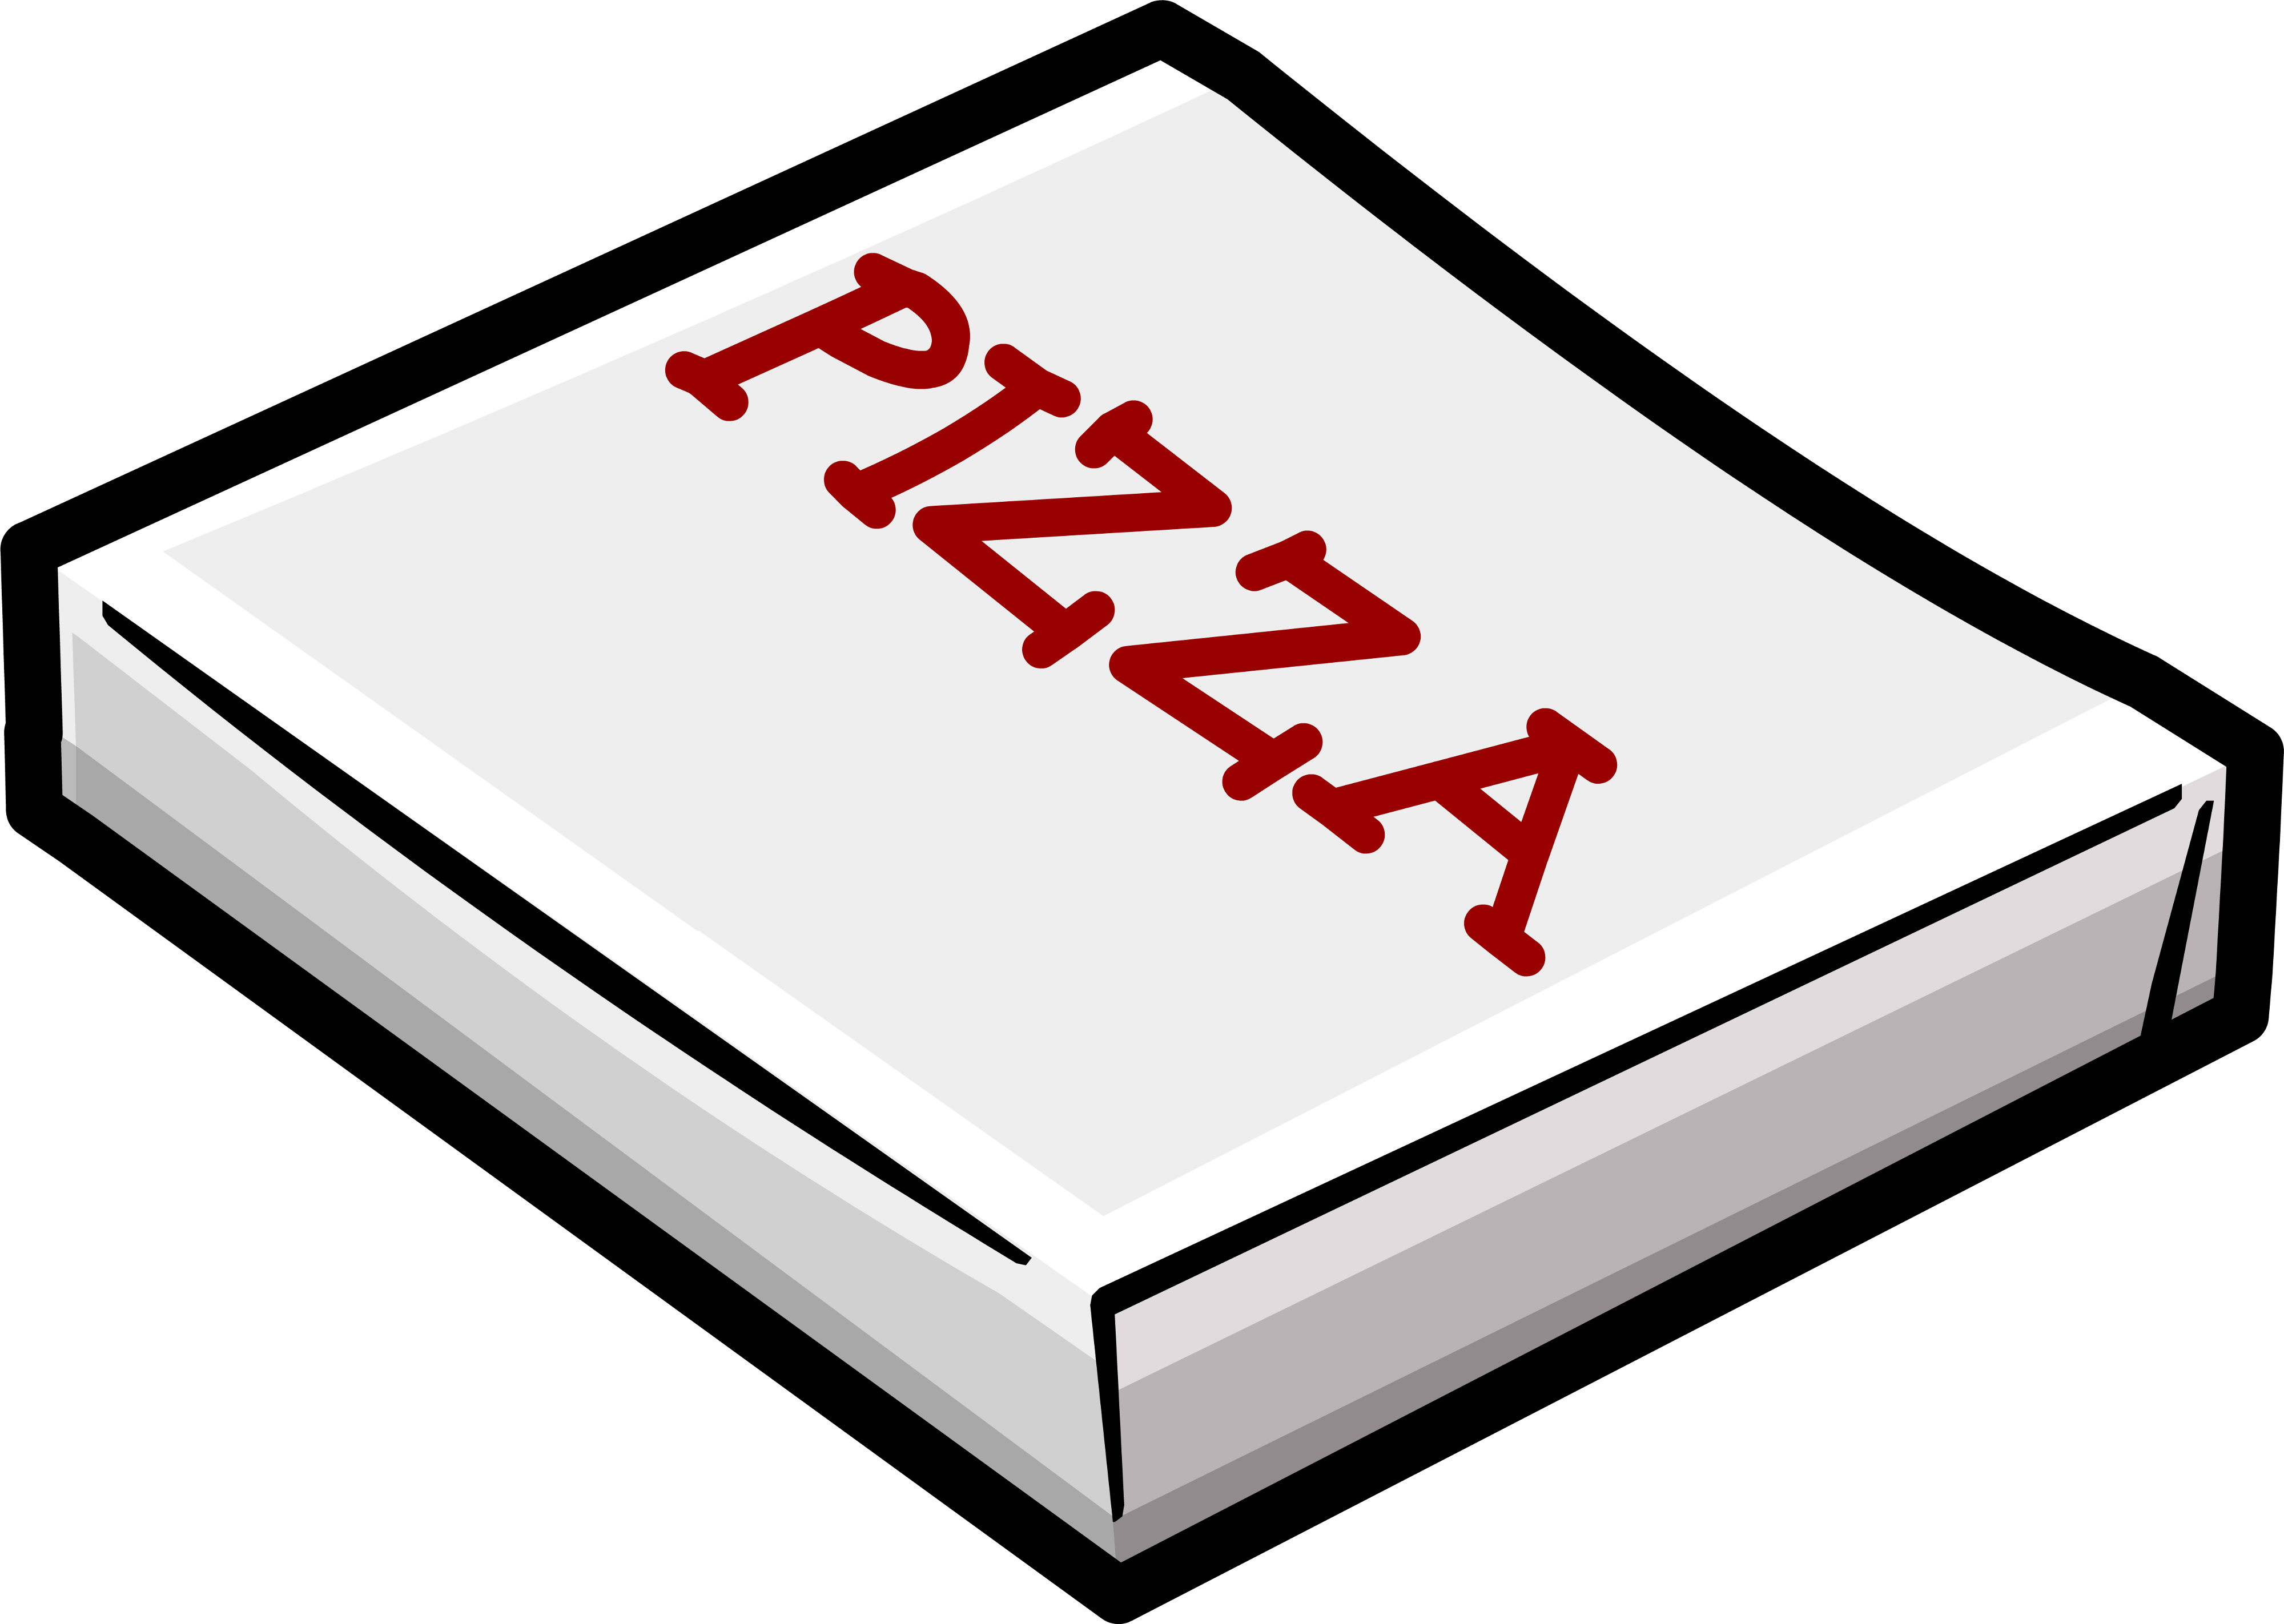 Closed Pizza Box Illustration